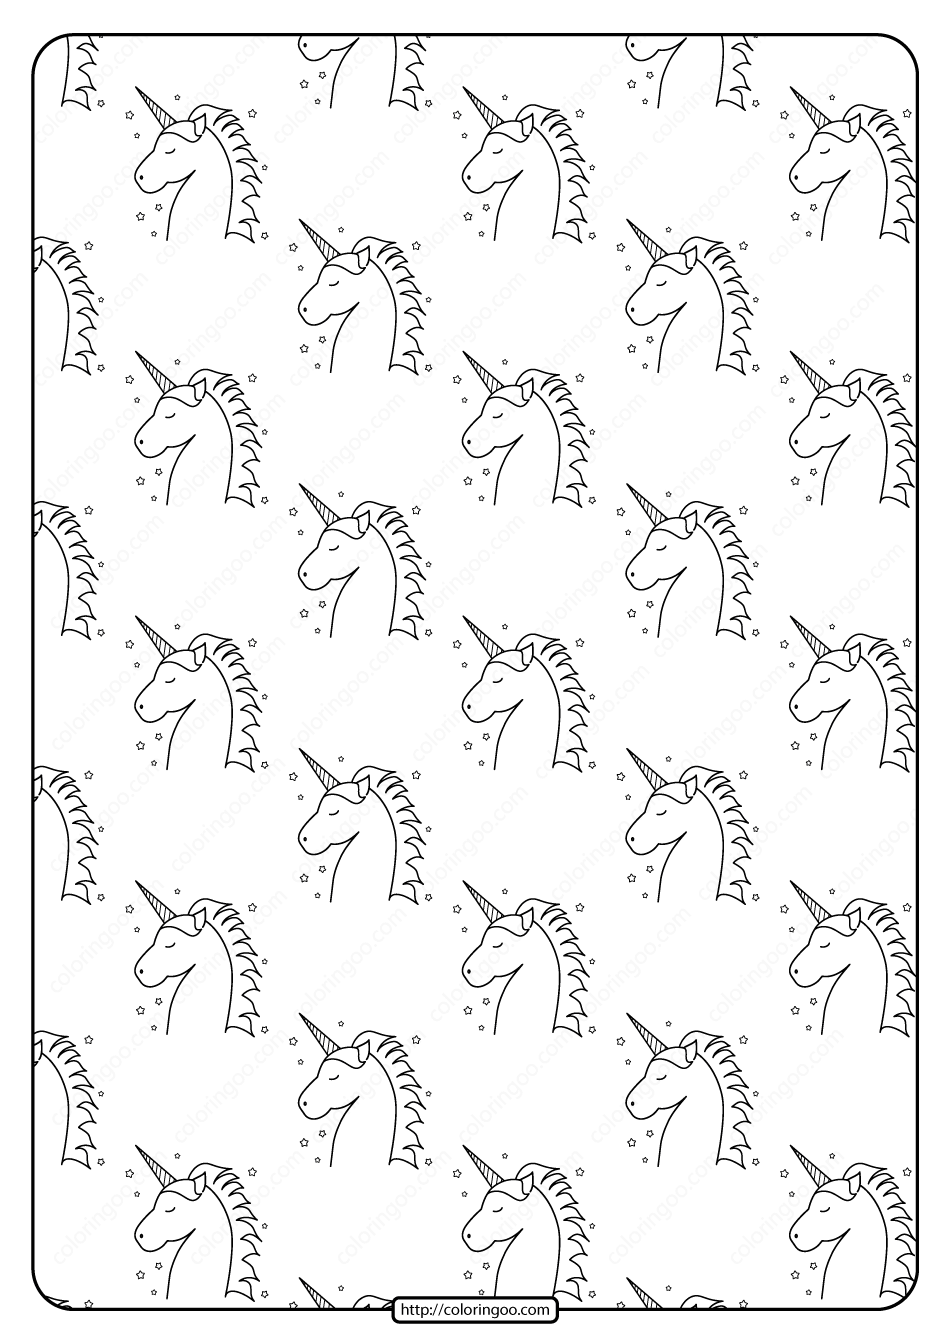 free printable cute cartoon unicorn pattern coloring page